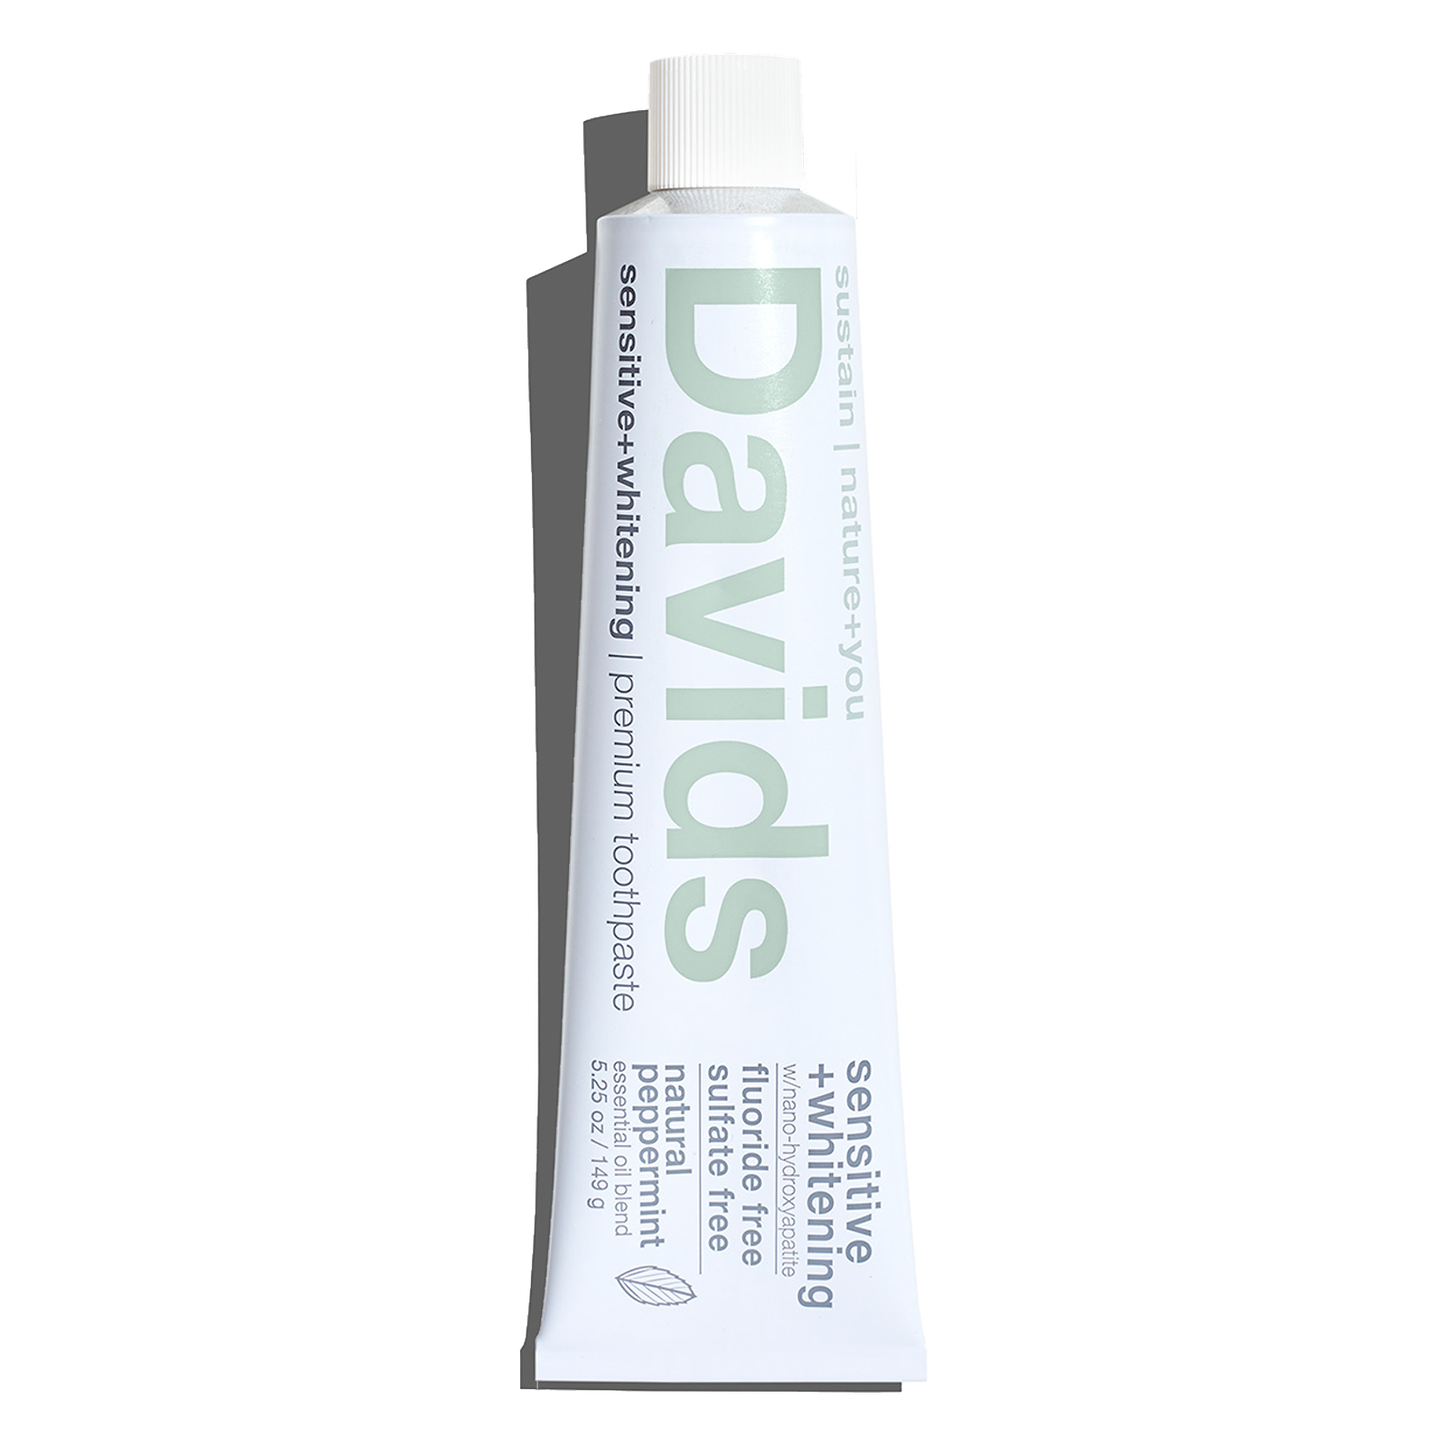 Davids Sensitive+Whitening nano-Hydroxyapatite premium natural toothpaste